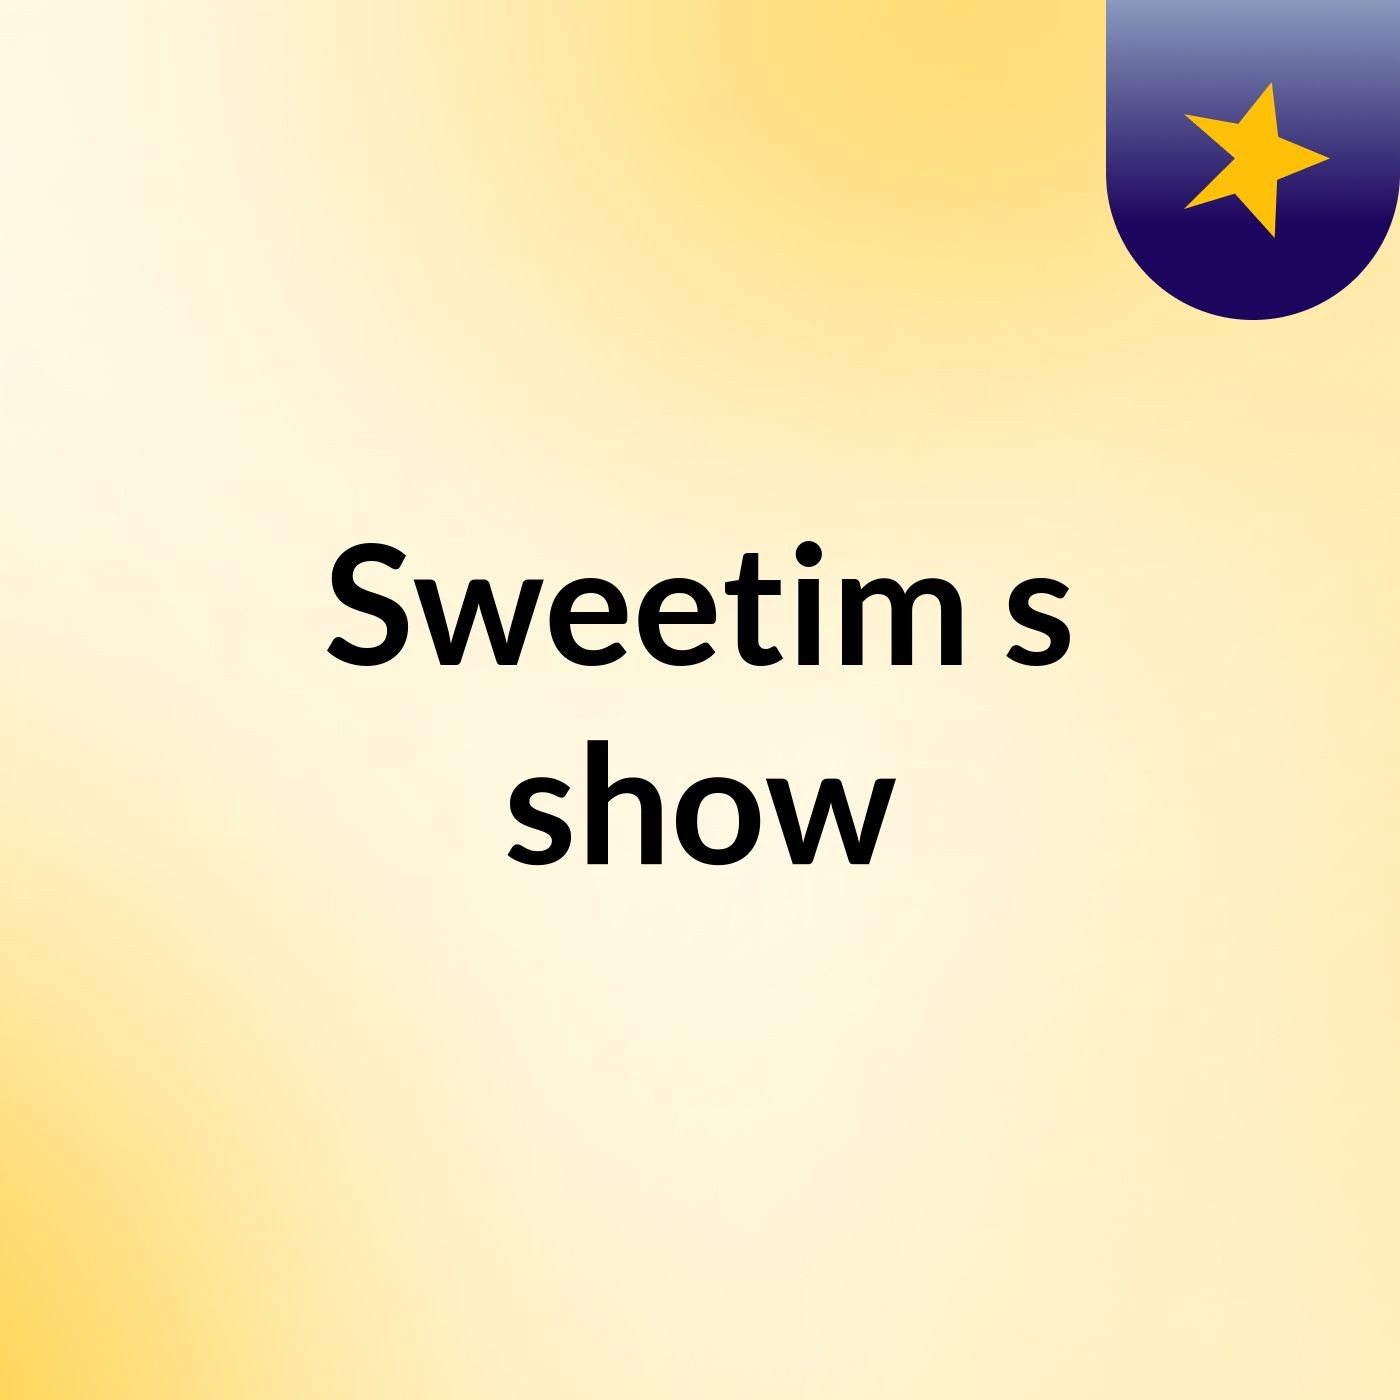 Sweetim's show